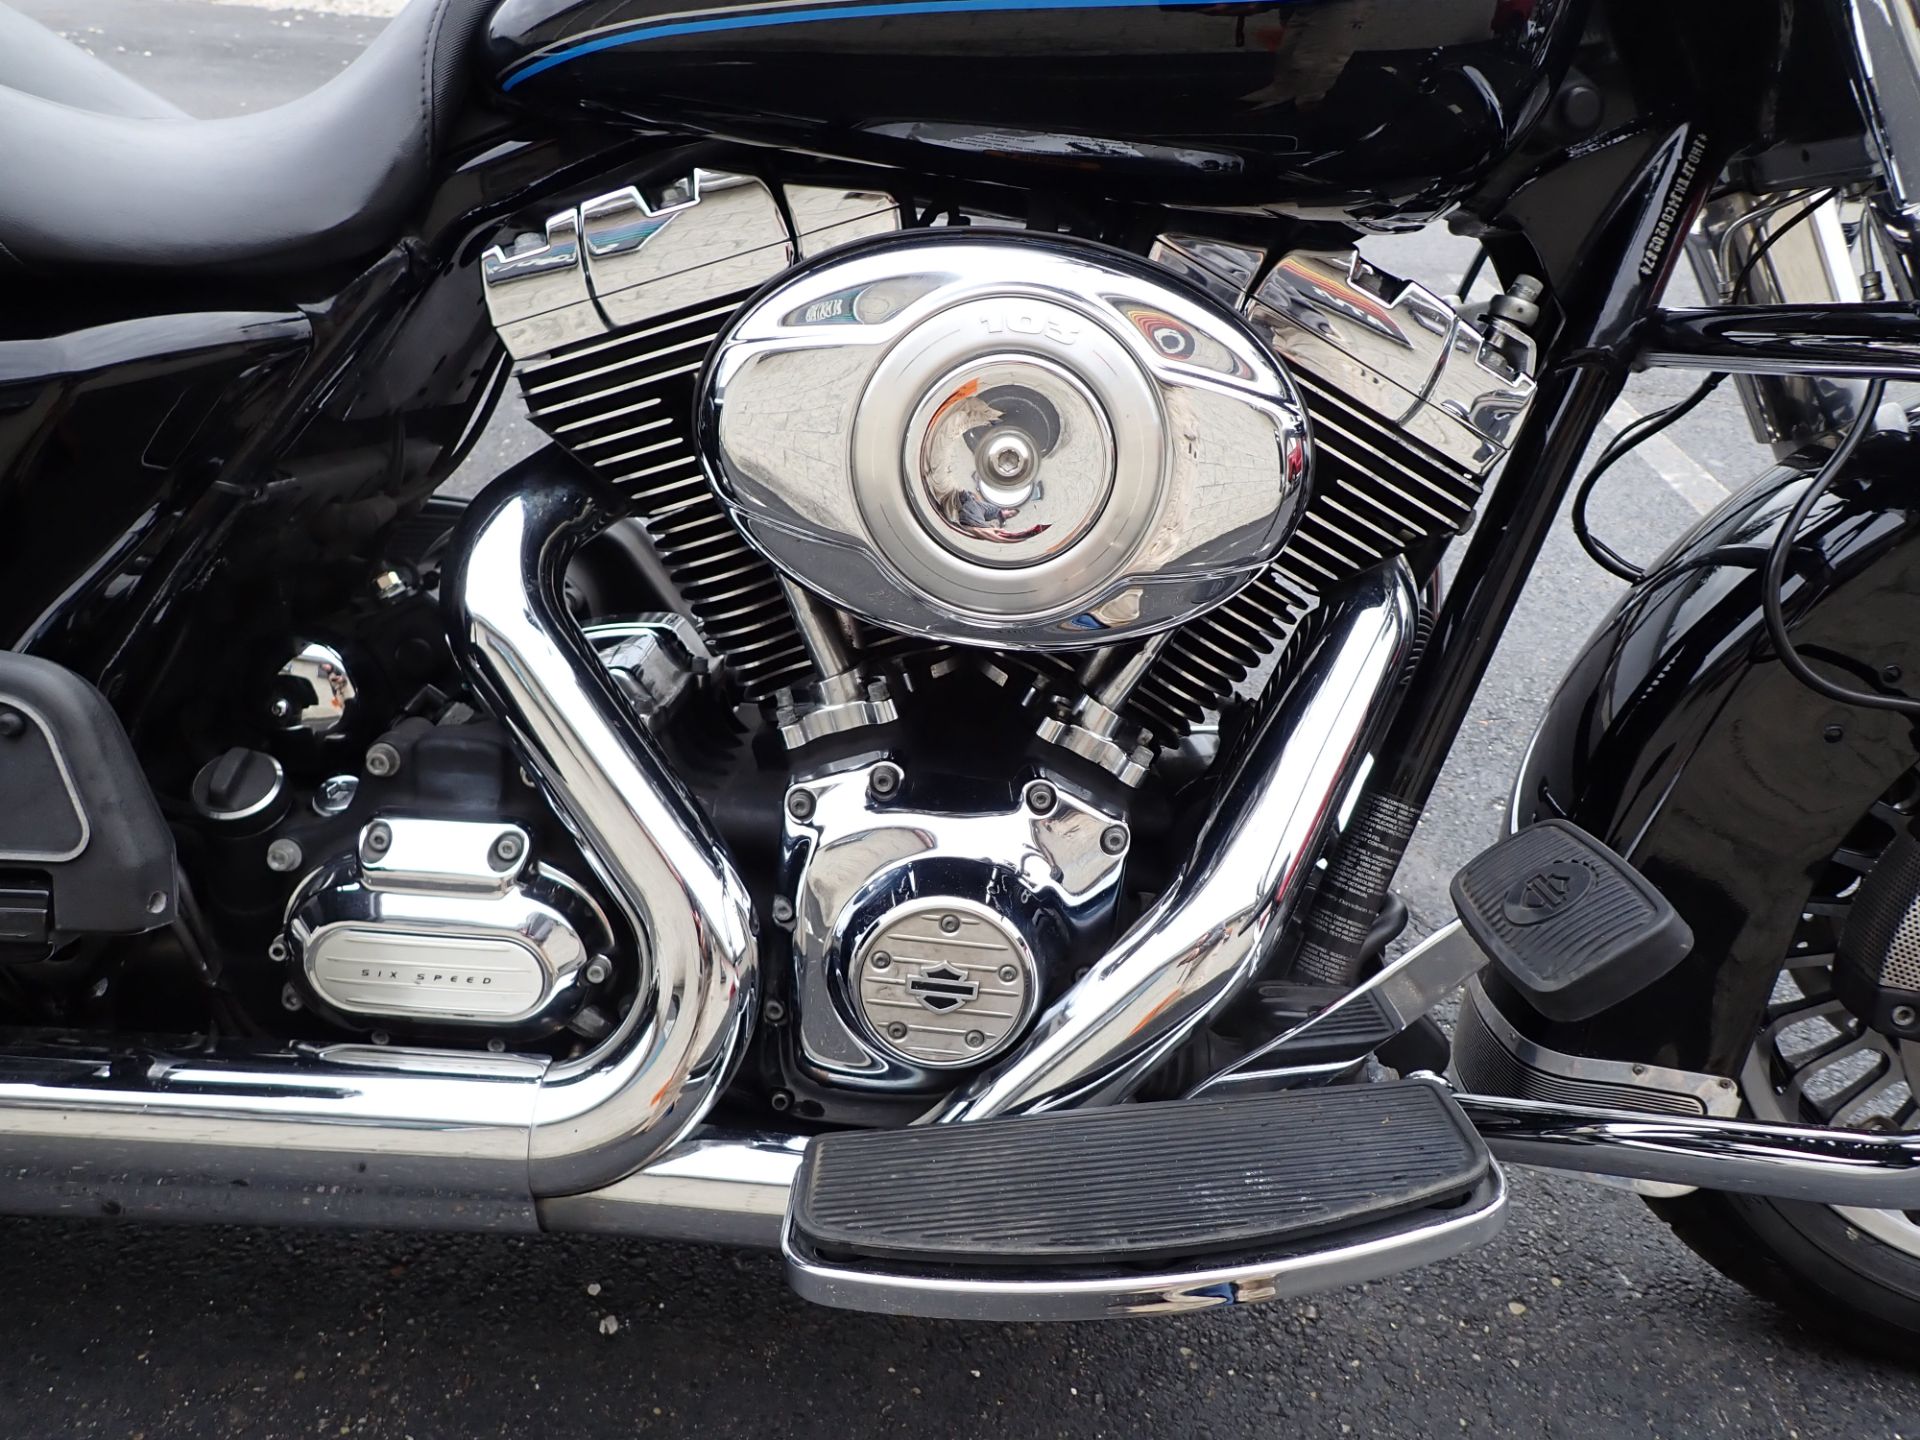 2012 Harley-Davidson Road King® in Massillon, Ohio - Photo 4